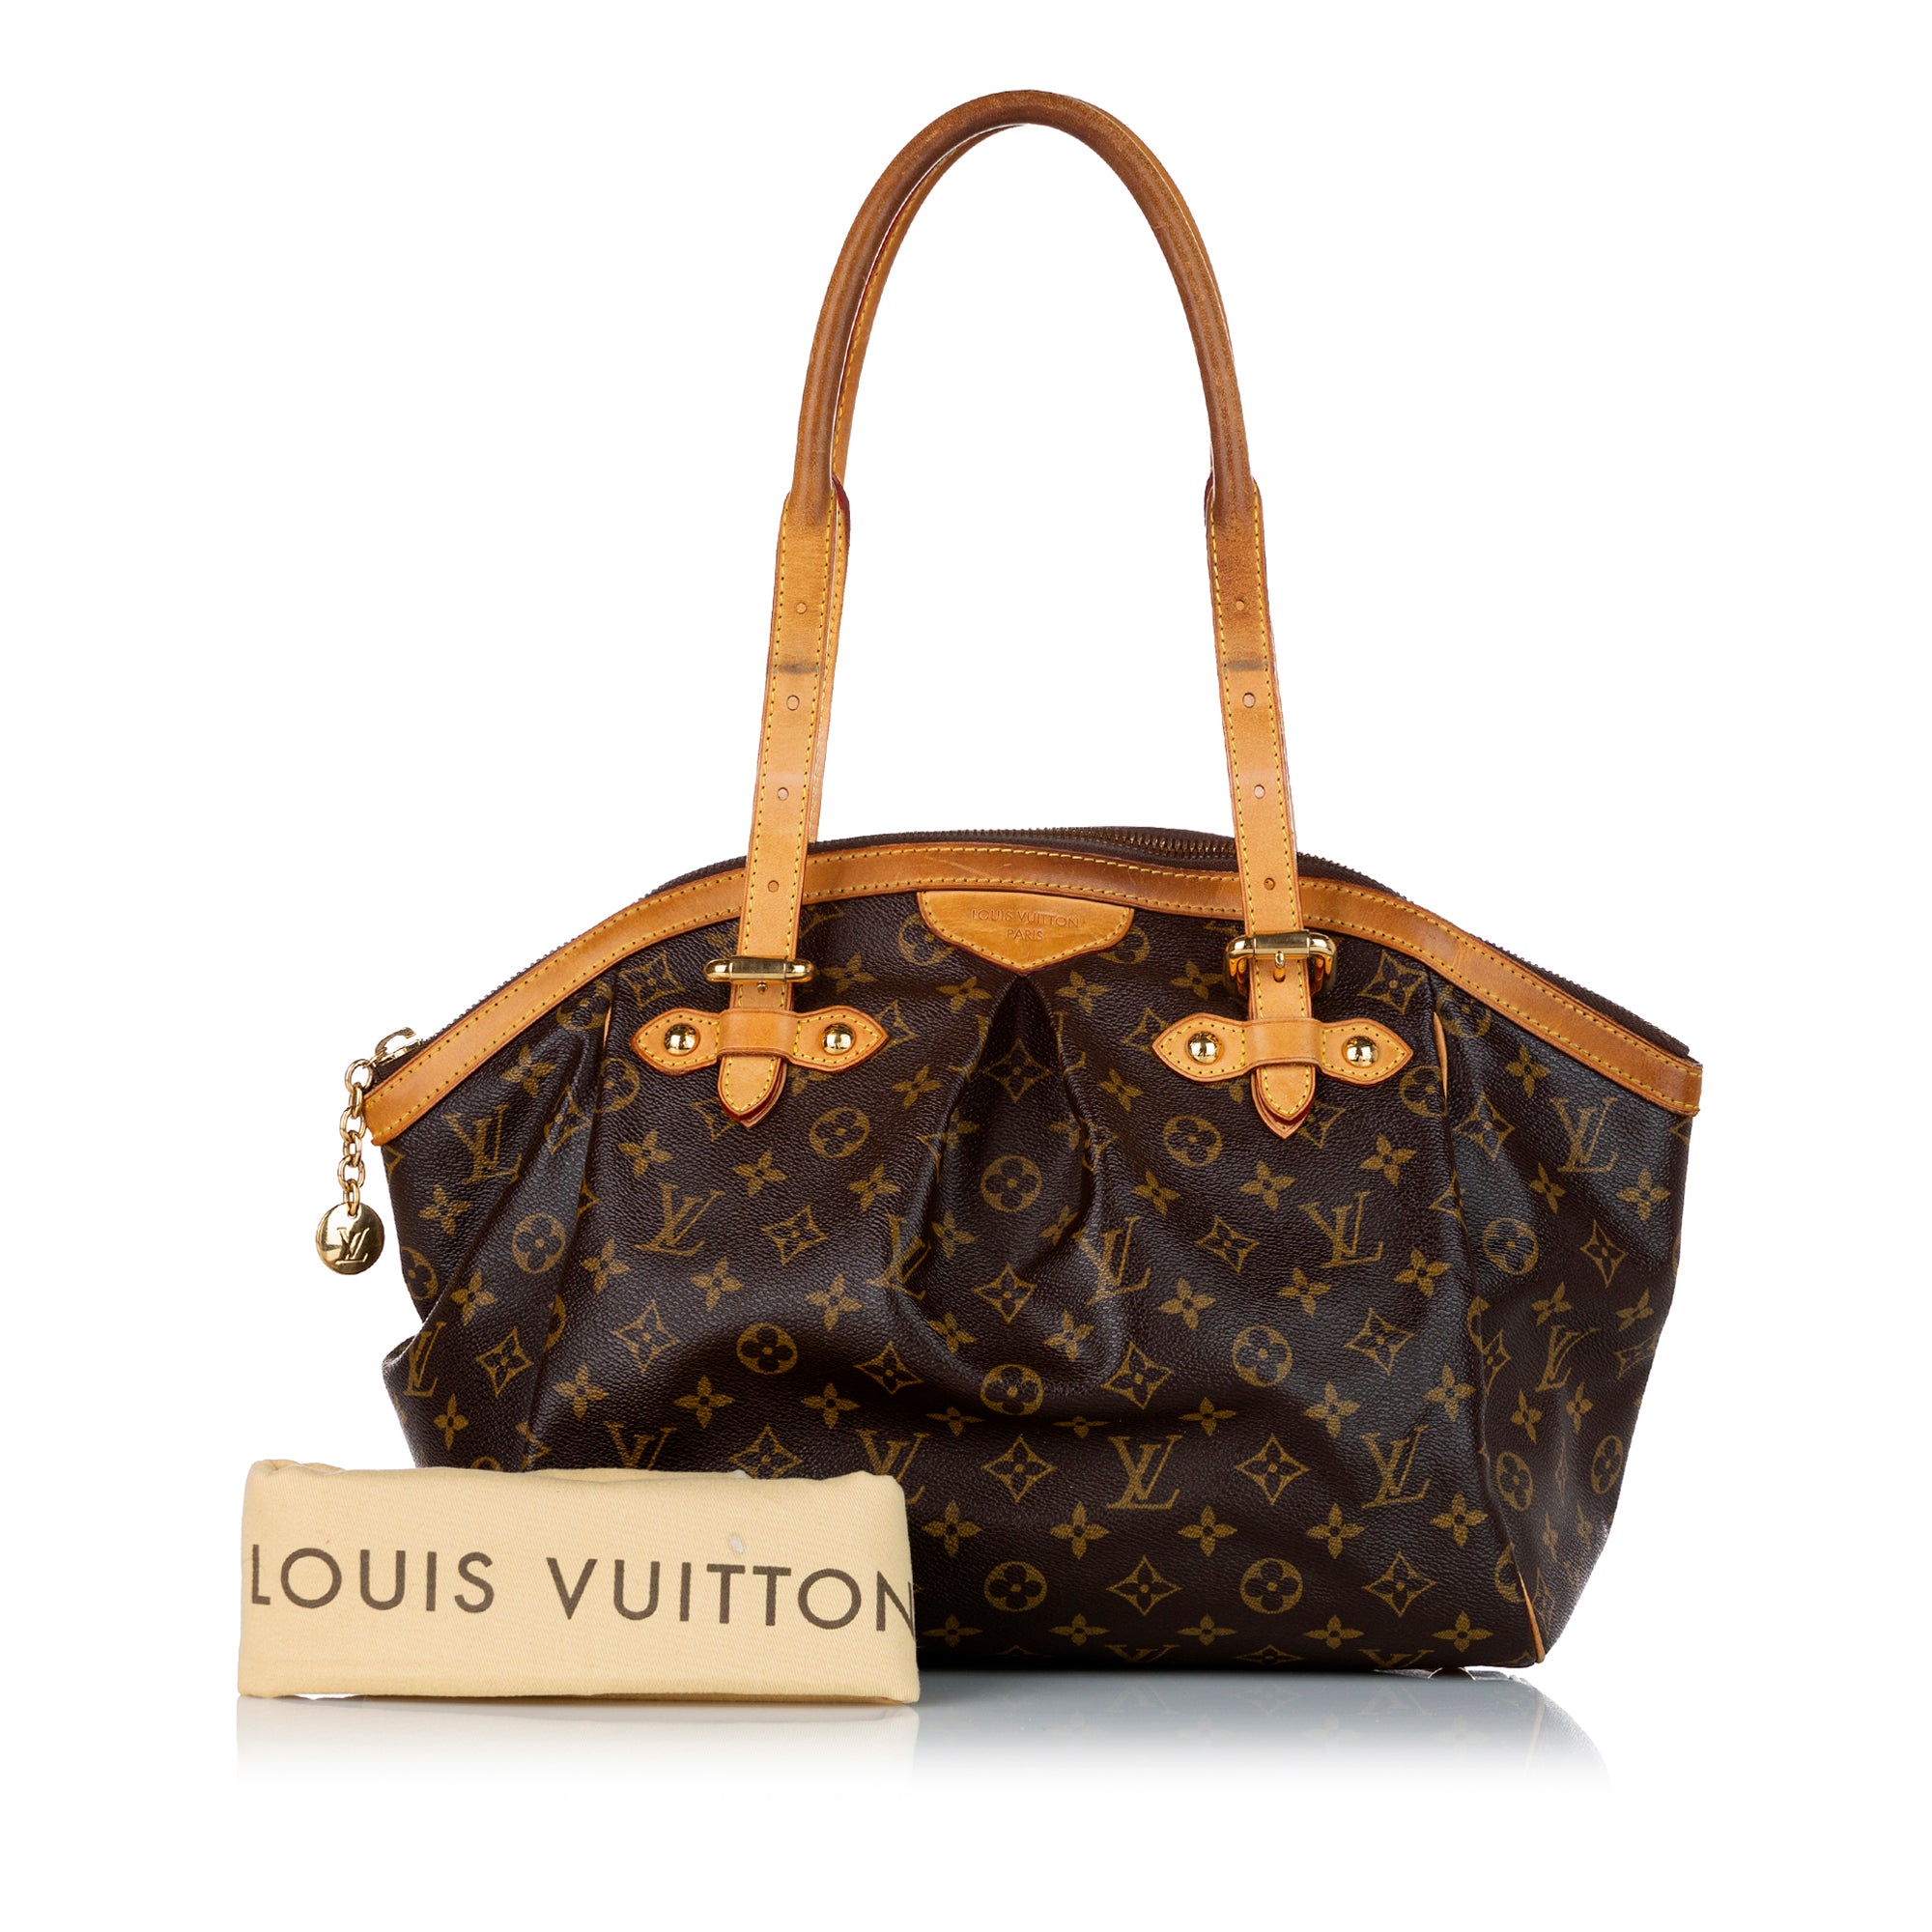 Authentic Louis Vuitton Tivoli GM size